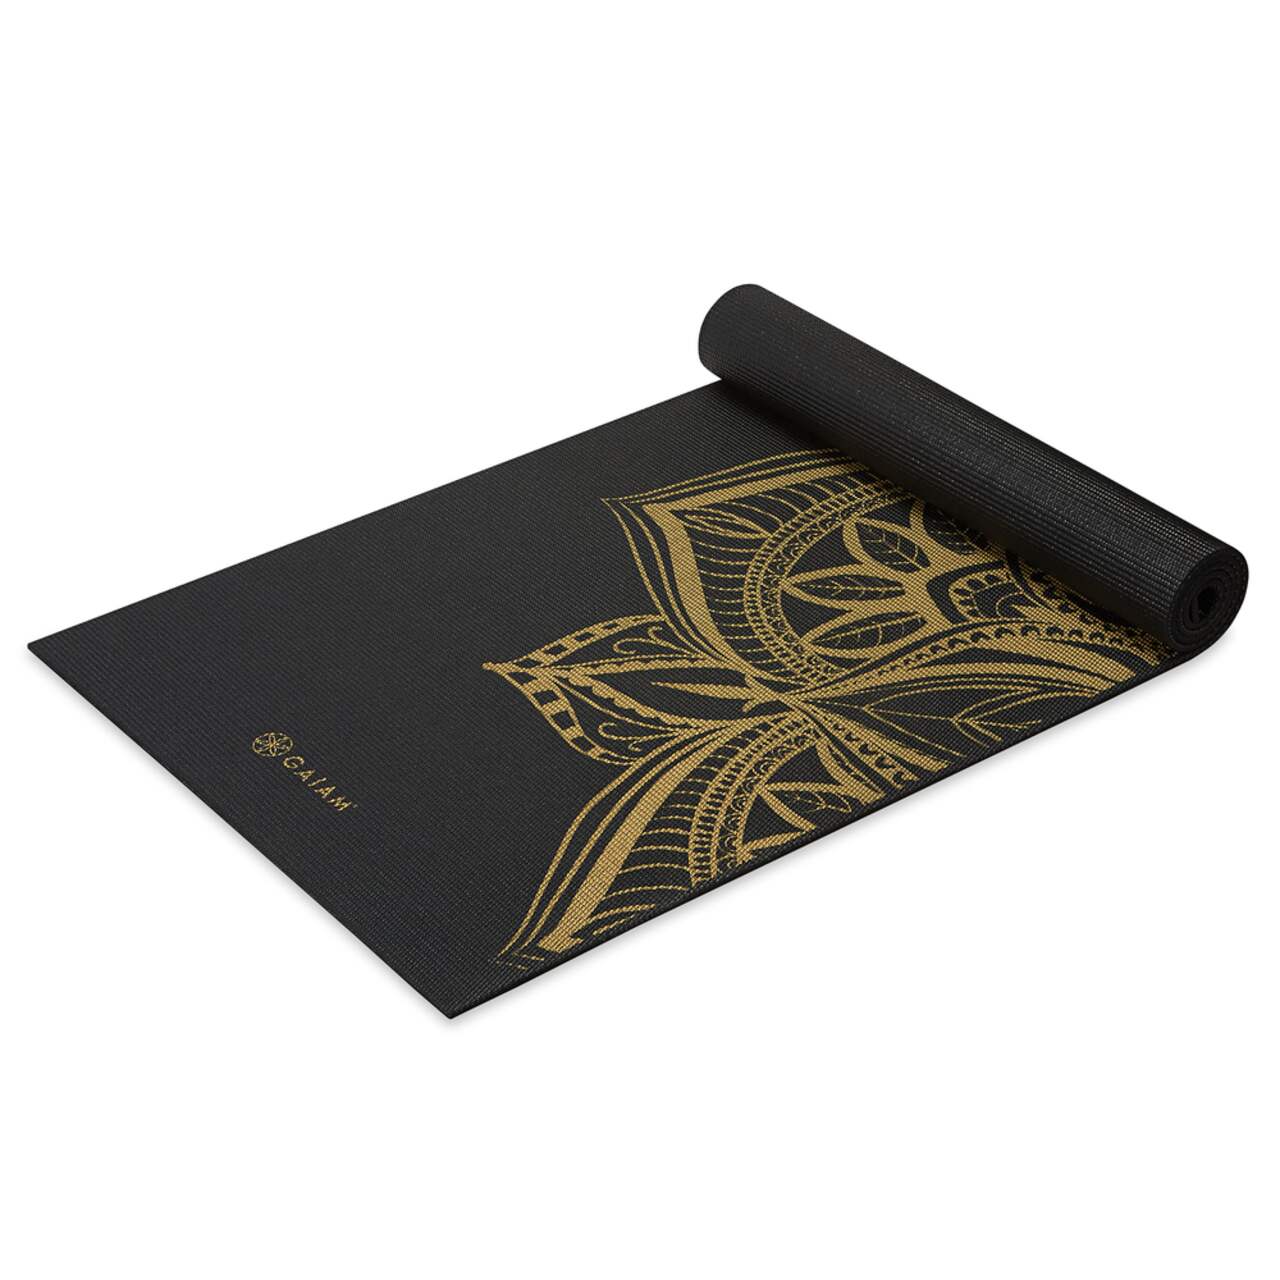 Gaiam Bronze Medallion Yoga Mat, Black/Gold, 4-mm